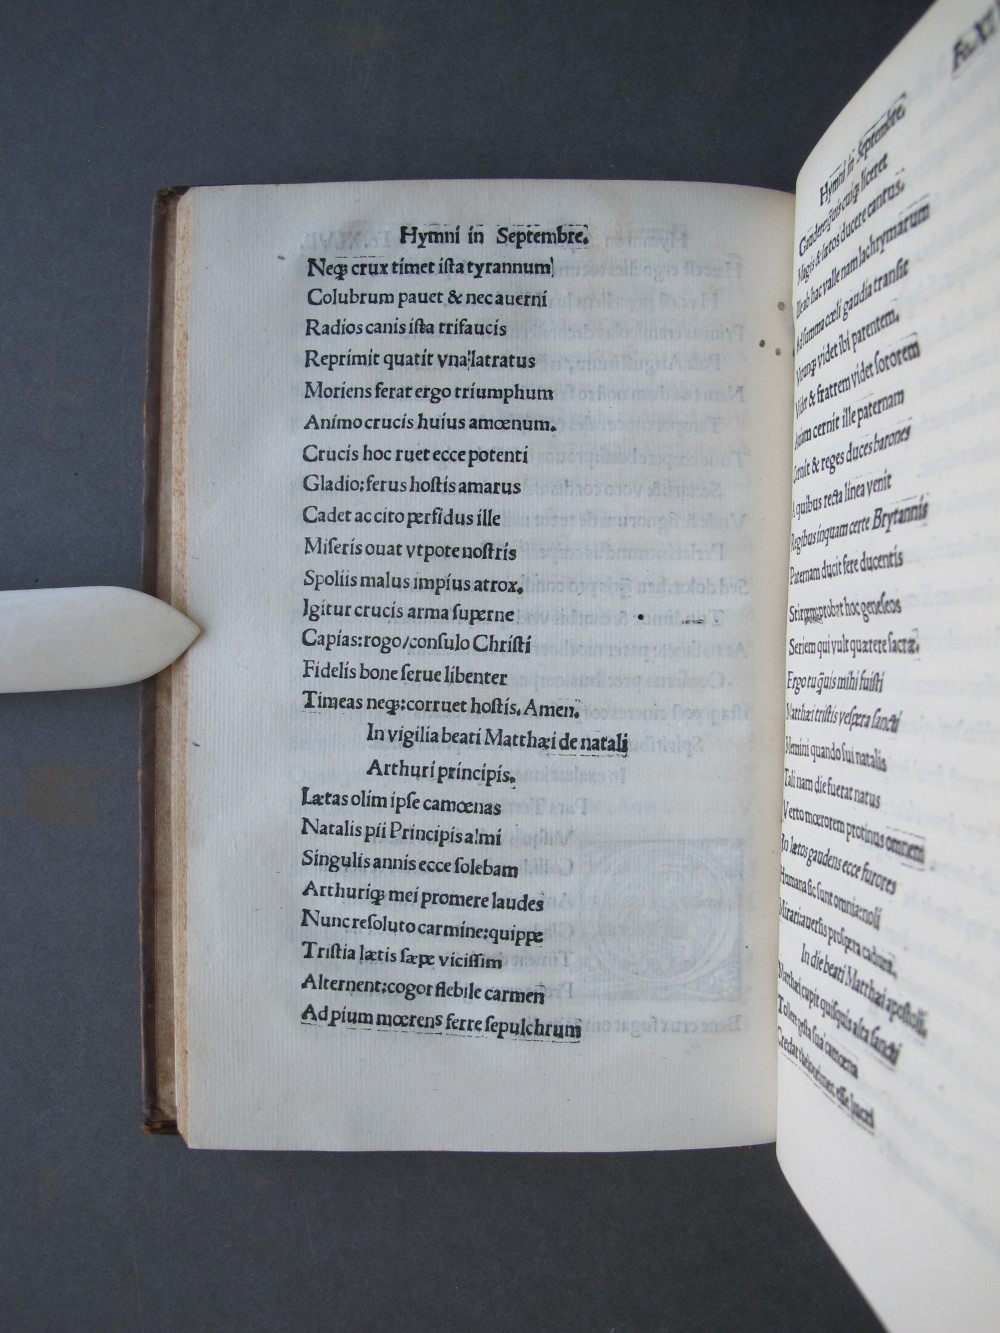 Folio 47 verso